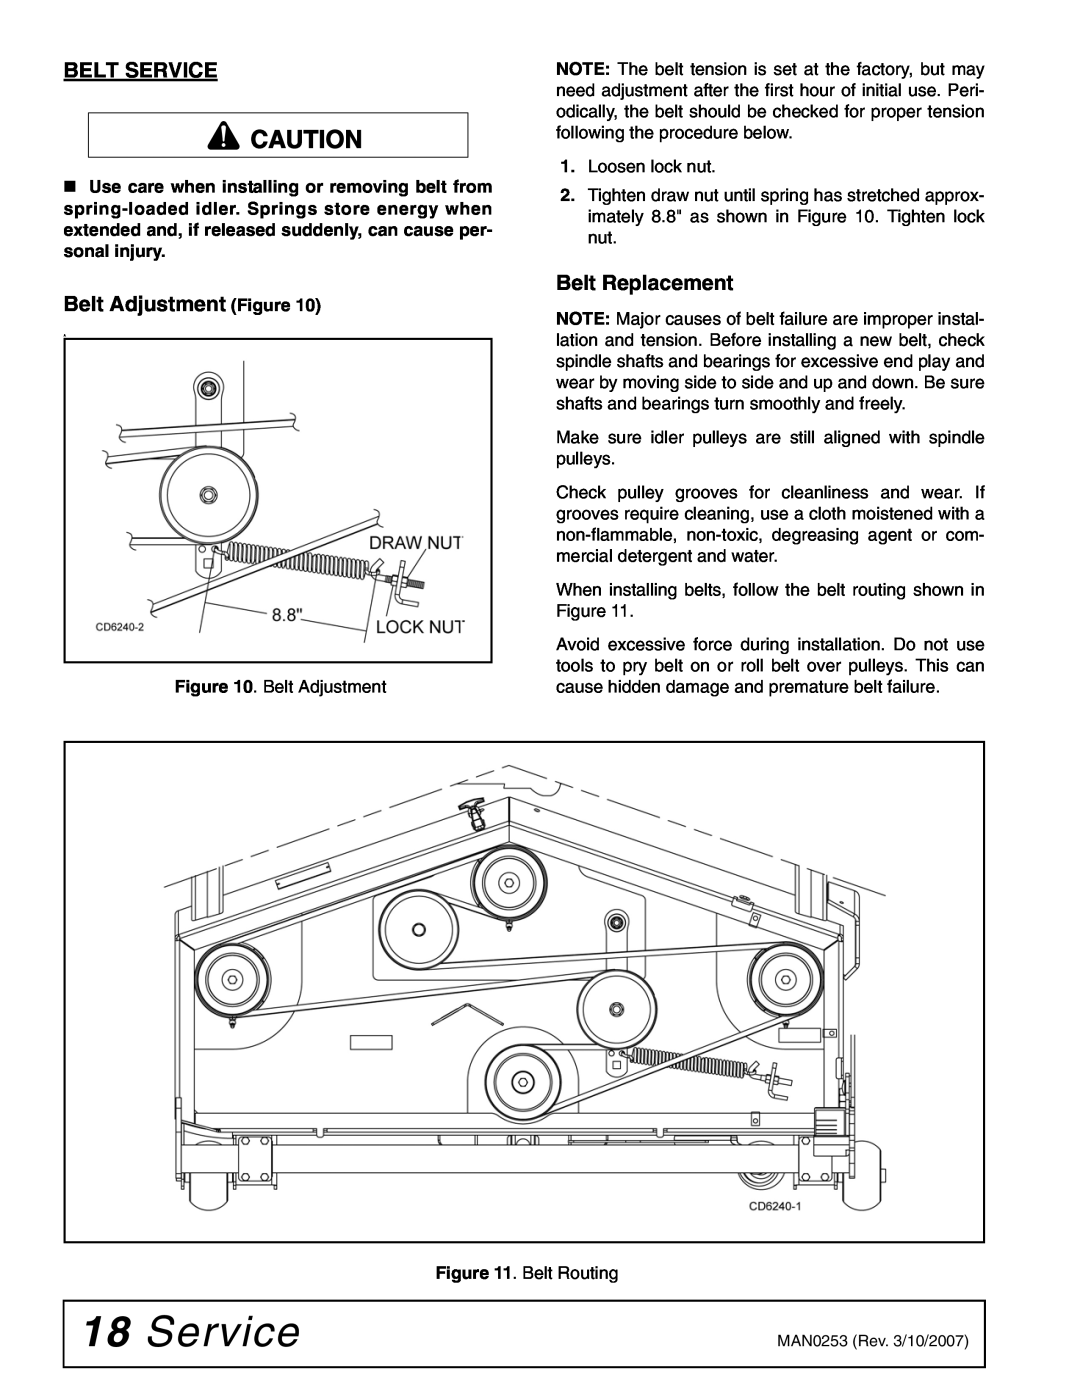 Woods Equipment MX61T, MX54T manual Belt Service, Belt Adjustment Figure, Belt Replacement 